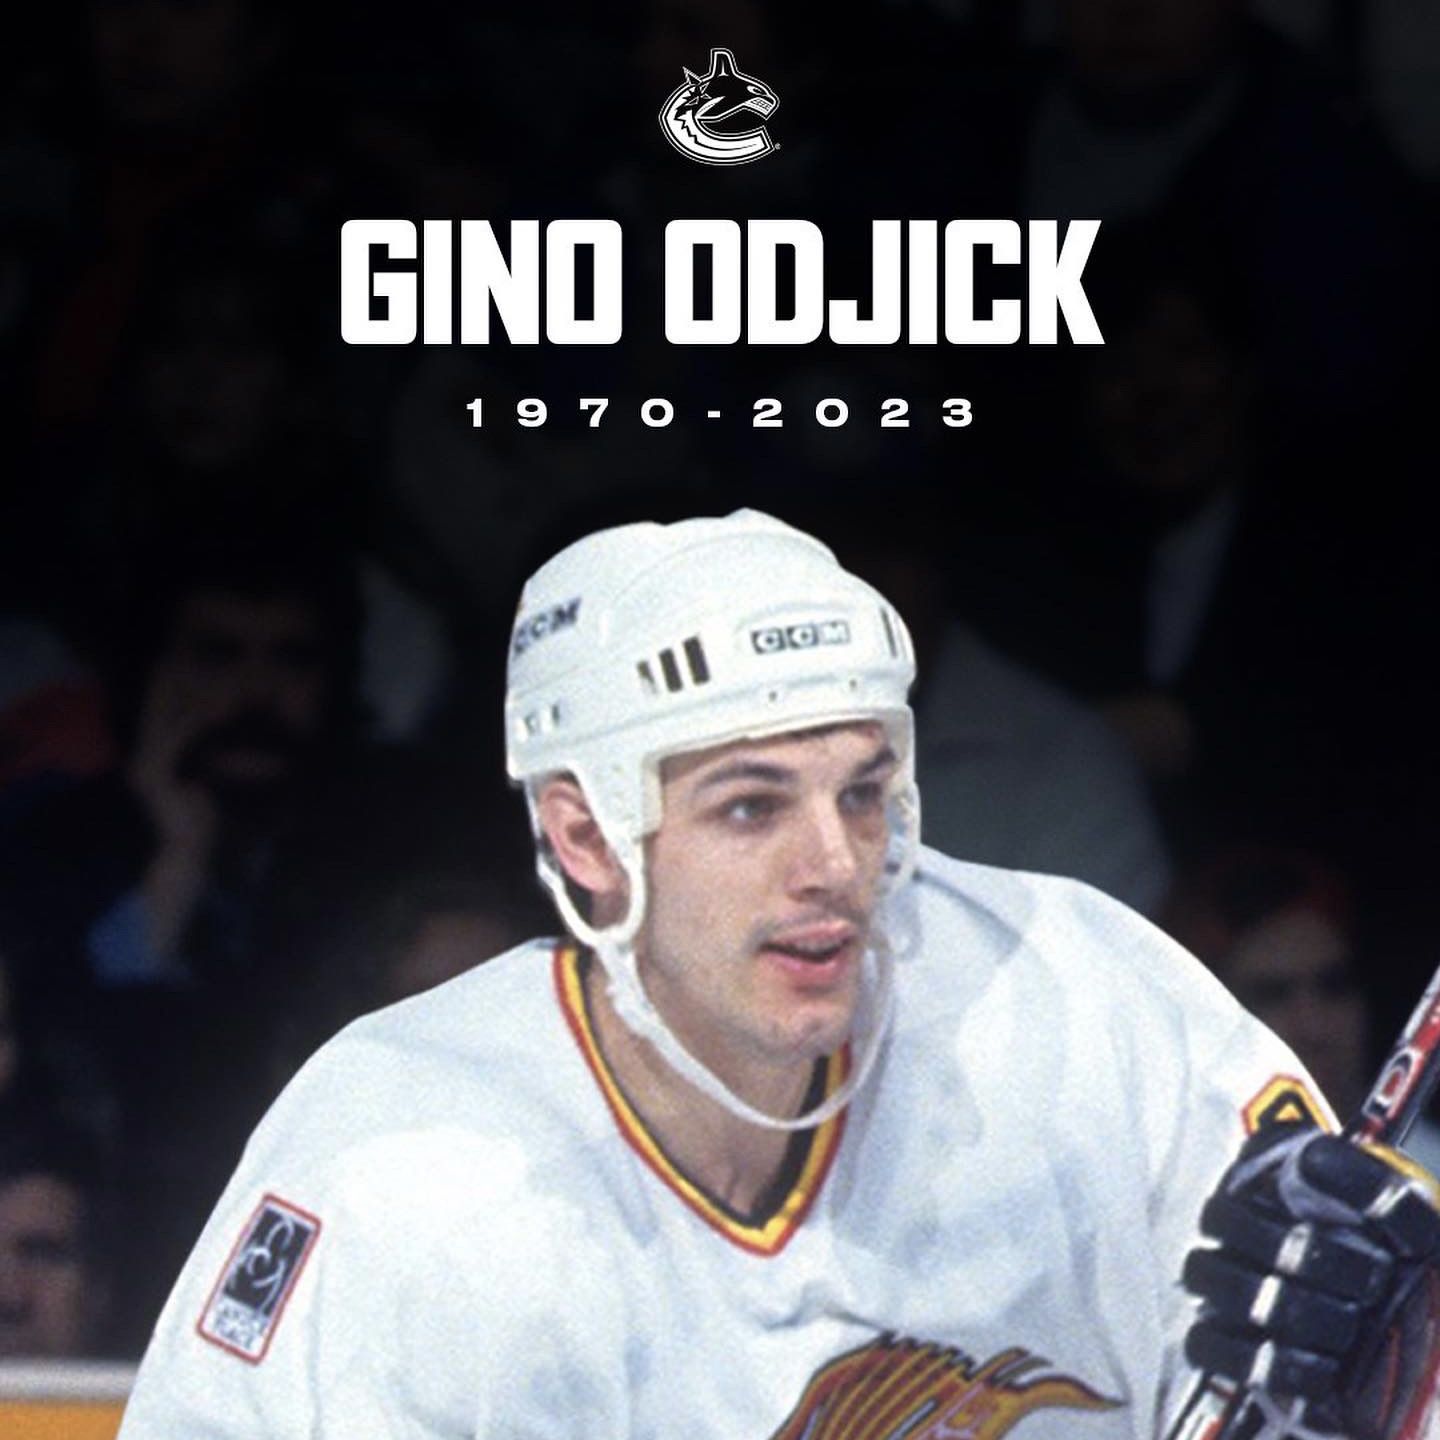 Who was Gino Odjick?